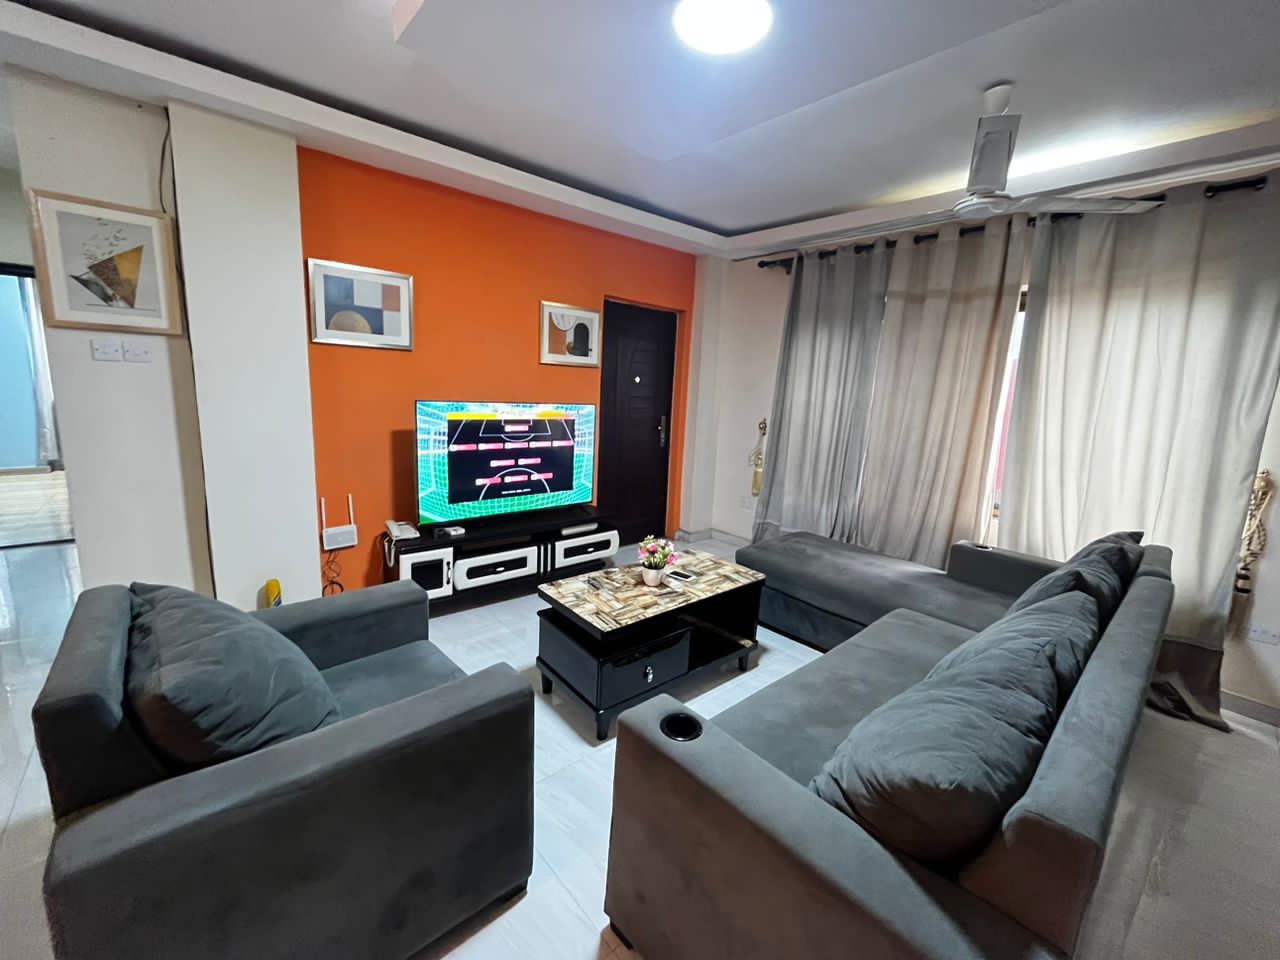 Two (2) Bedroom Furnished Apartment for Rent at Ogbojo